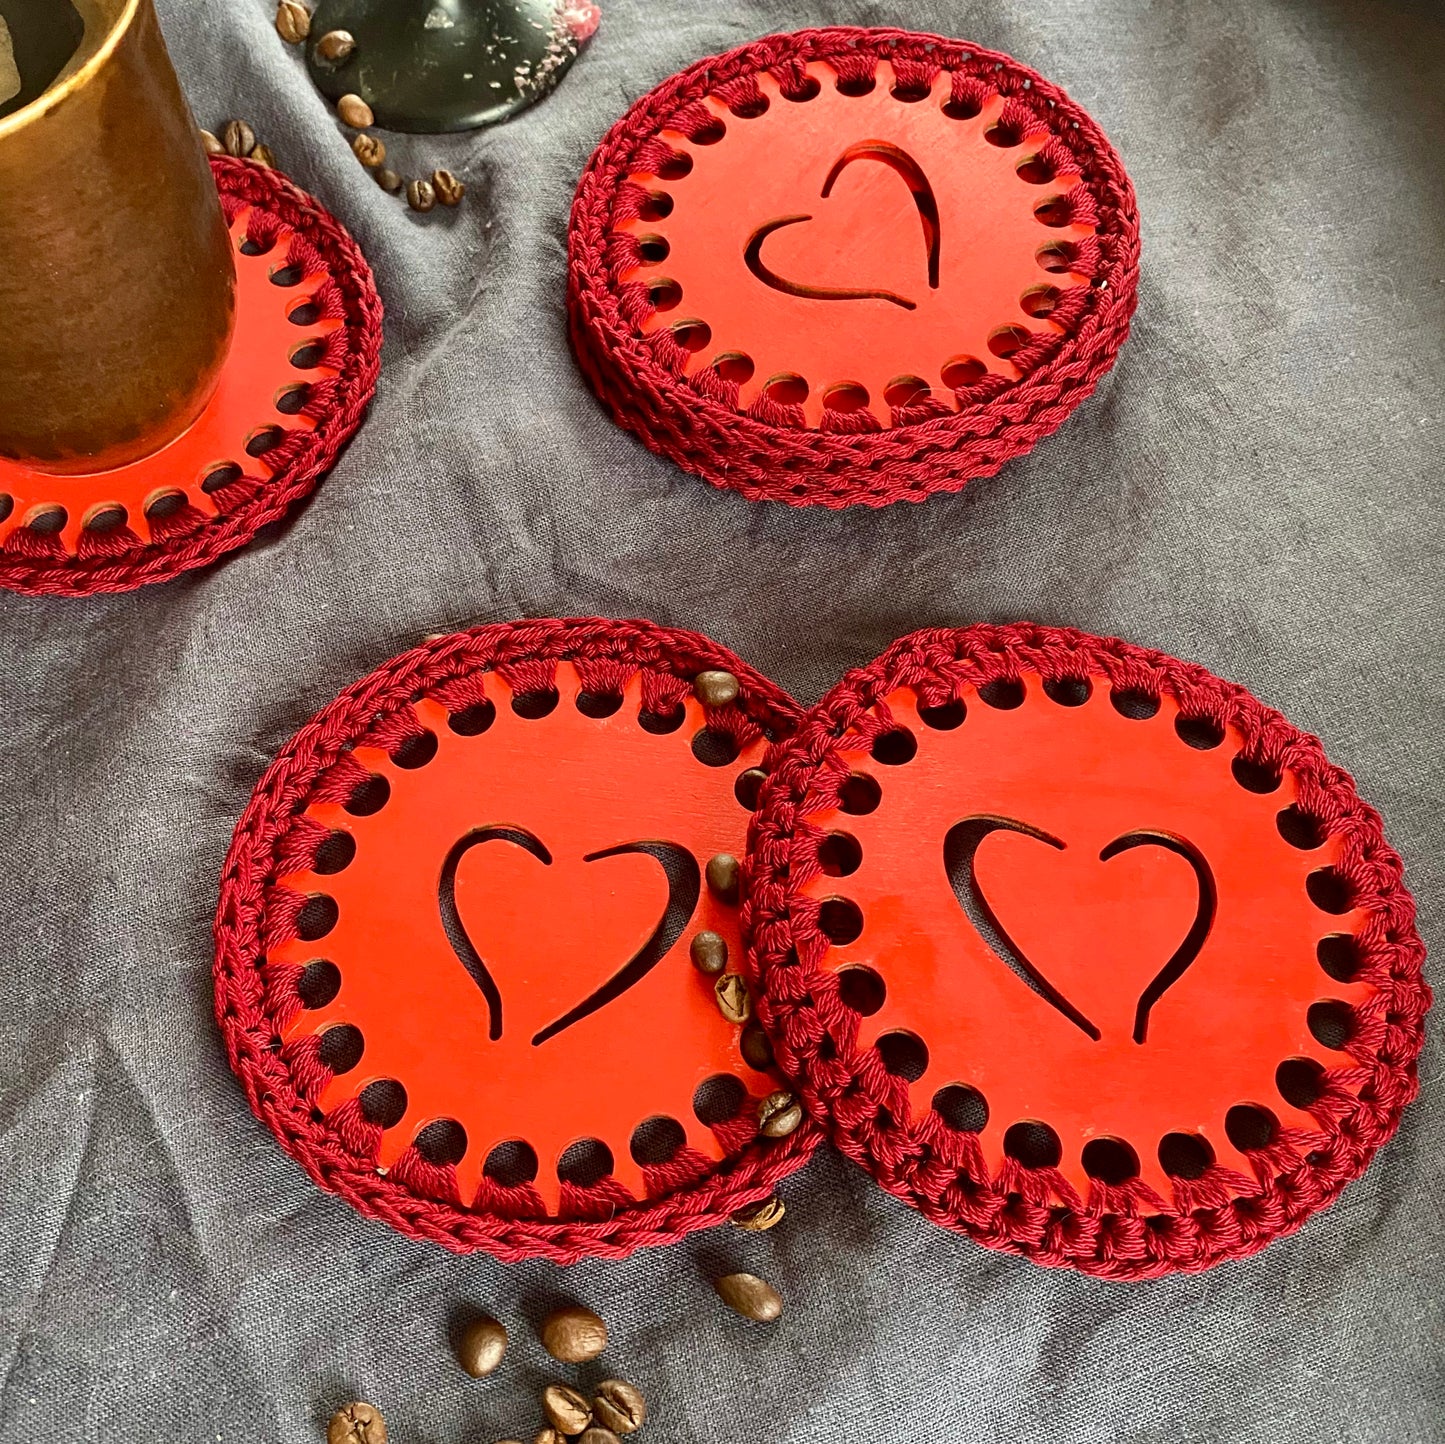 Heart of Love - Mug coasters